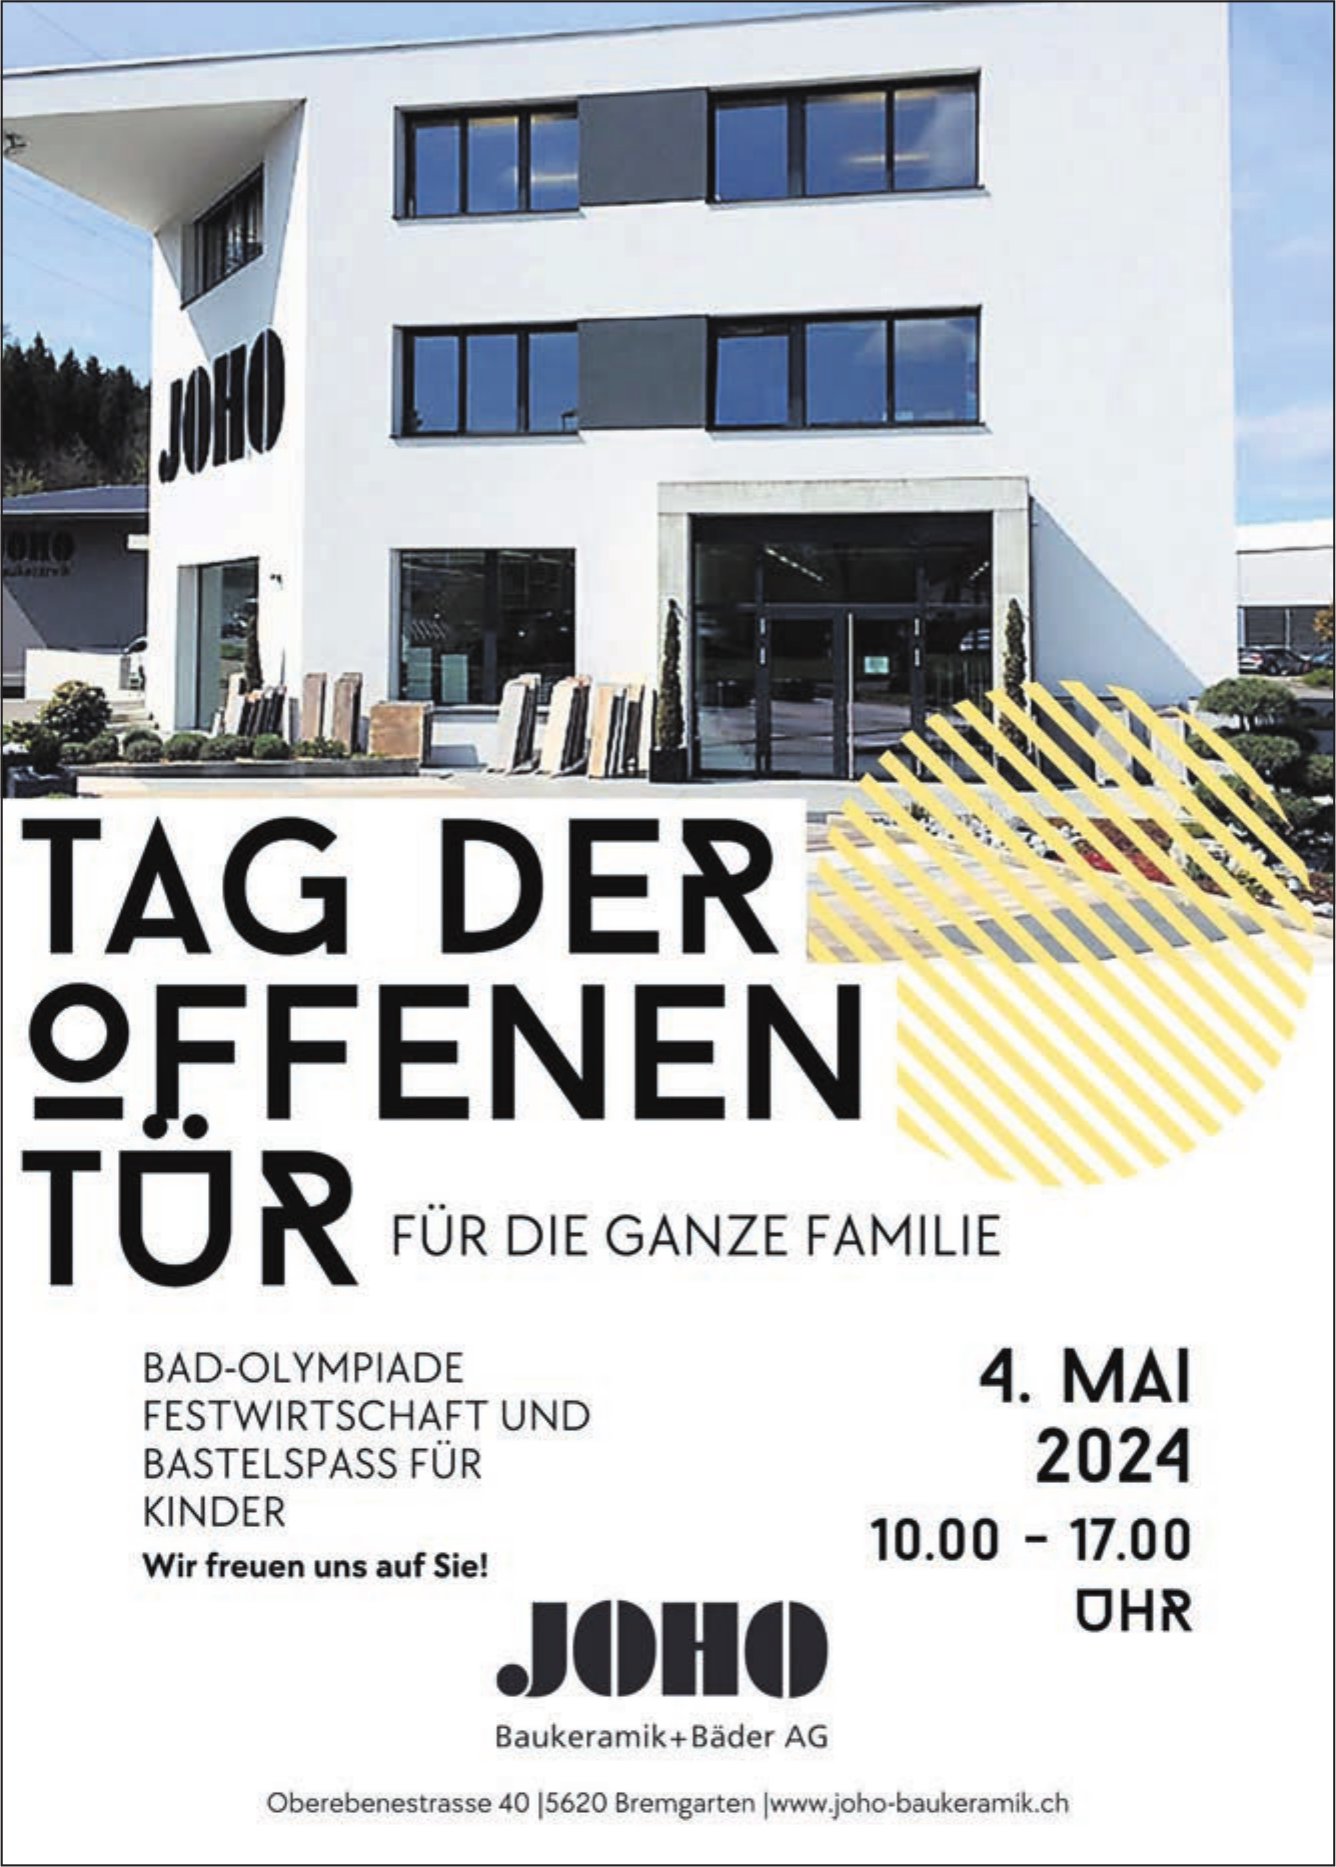 Tag der offenen Tür, 4. Mai, Joho Baukeramik + Bäder, Bremgarten